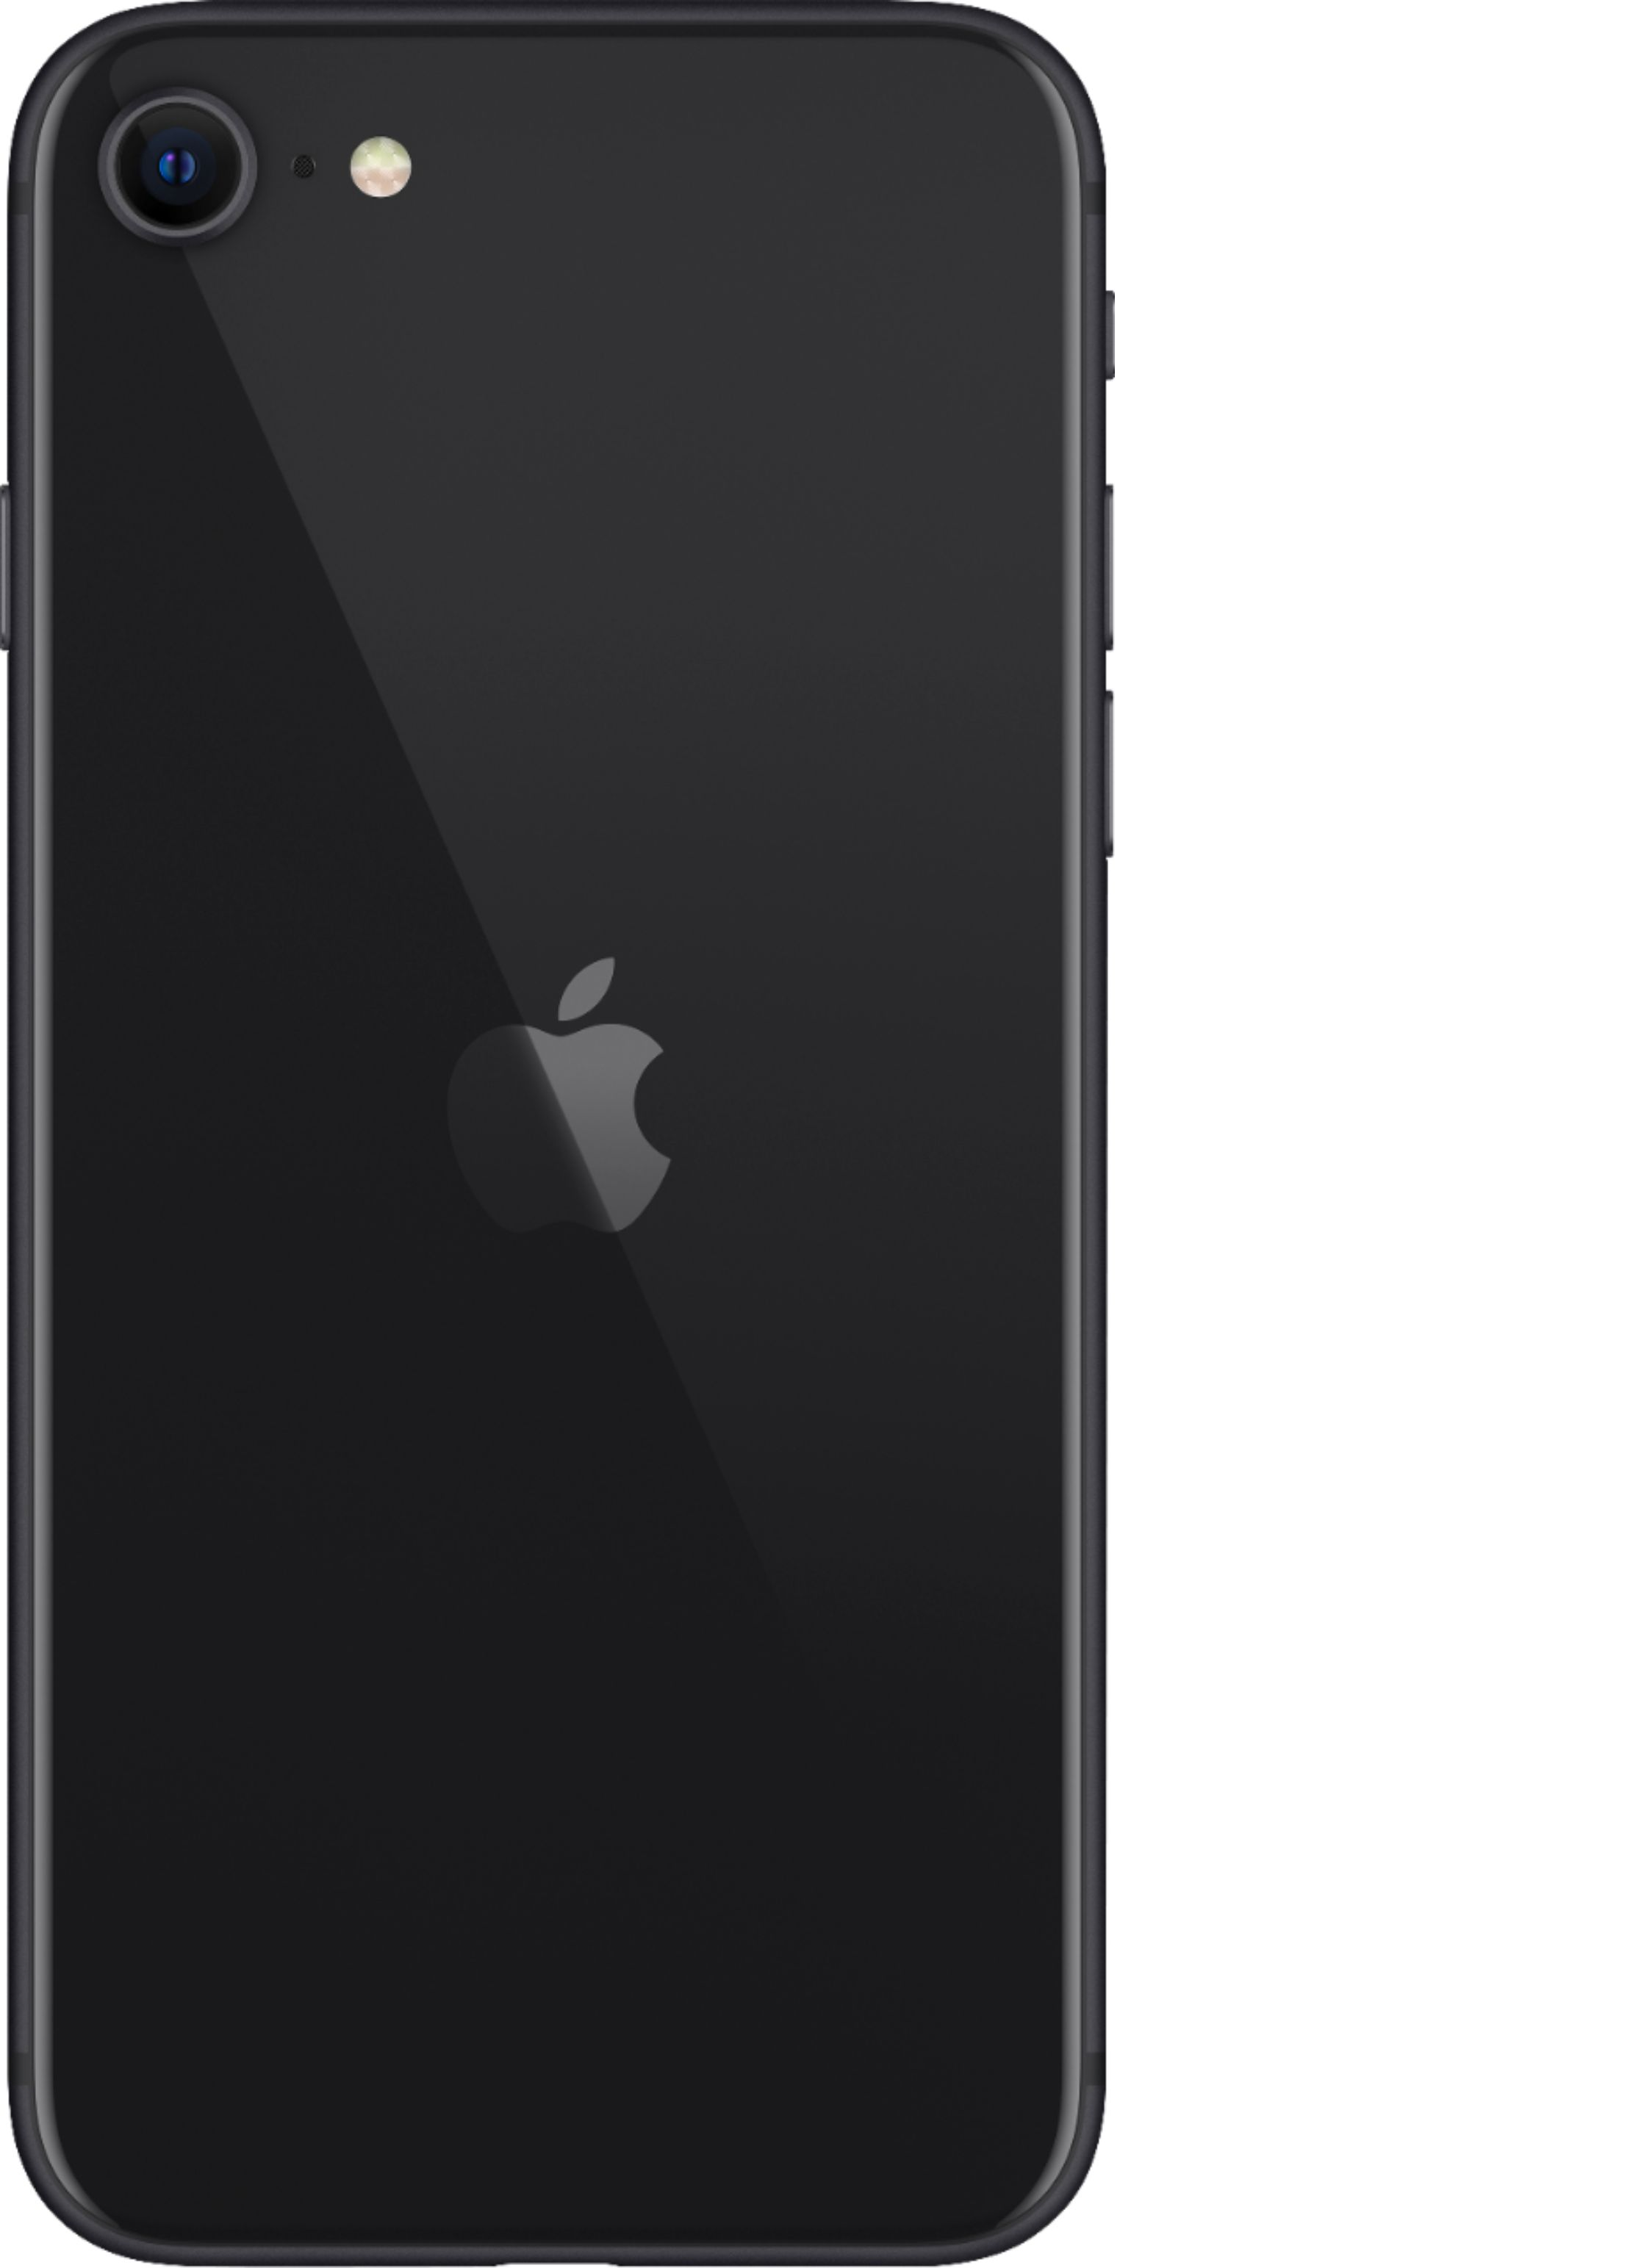 Apple - iPhone SE (2nd generation) 64GB (Unlocked) - Black